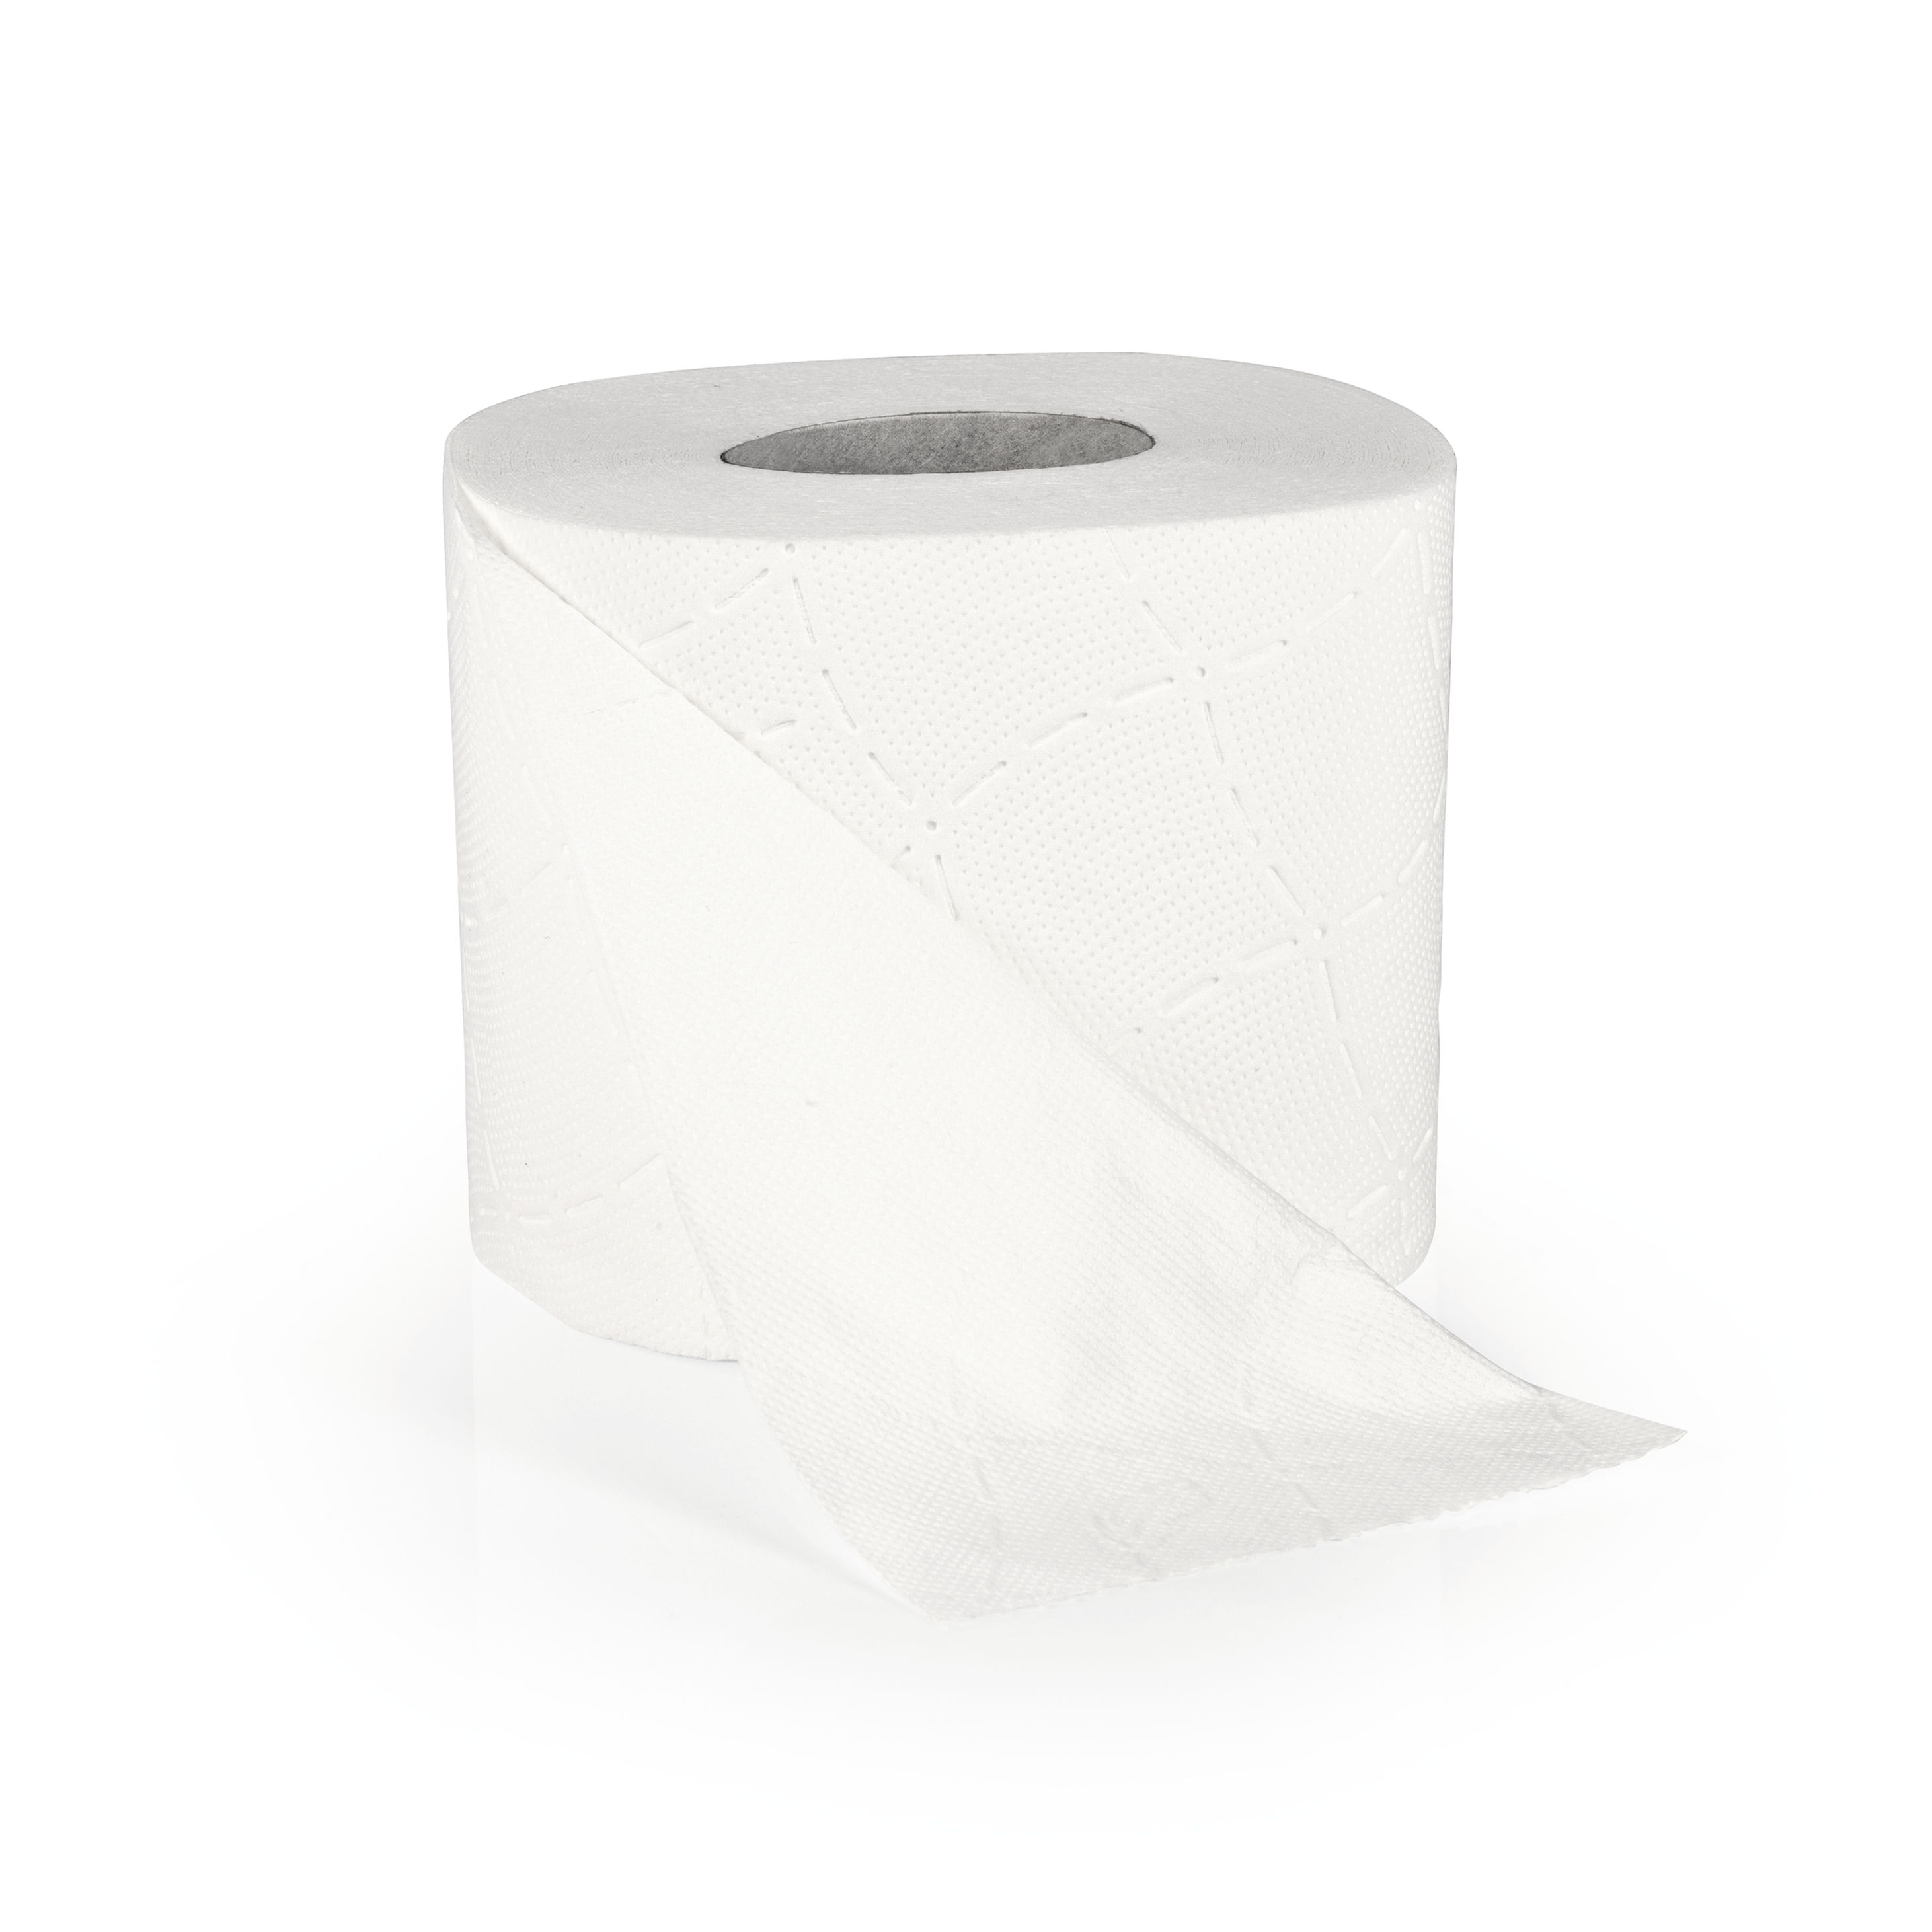 Bideo Toilettenpapierbefeuchter in weiß | Orbisana.de